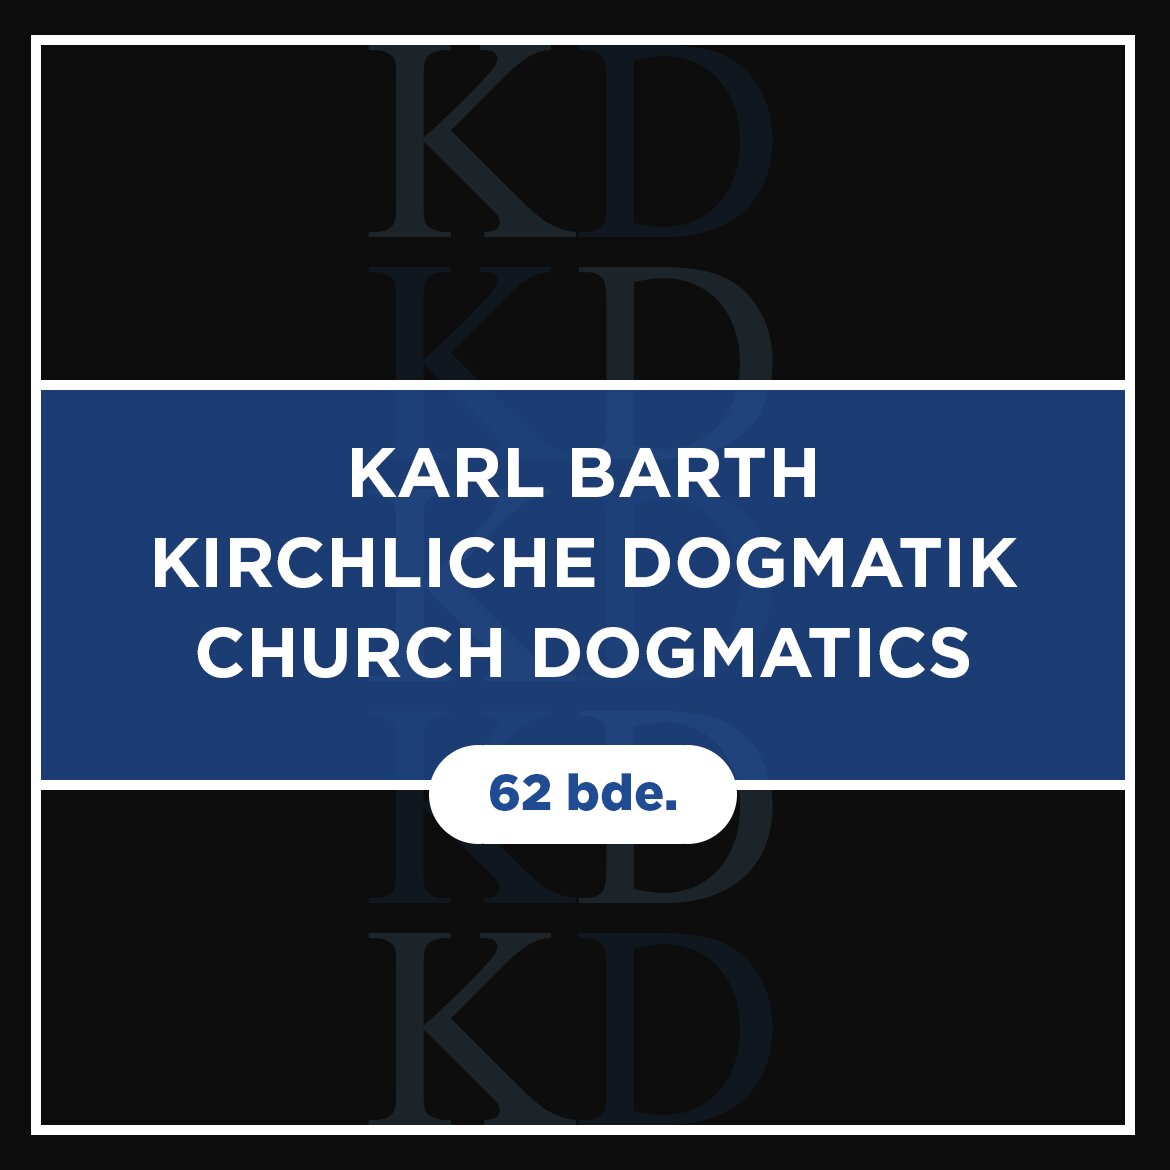 Karl Barth’s Church Dogmatics: English-German (62 vols.)